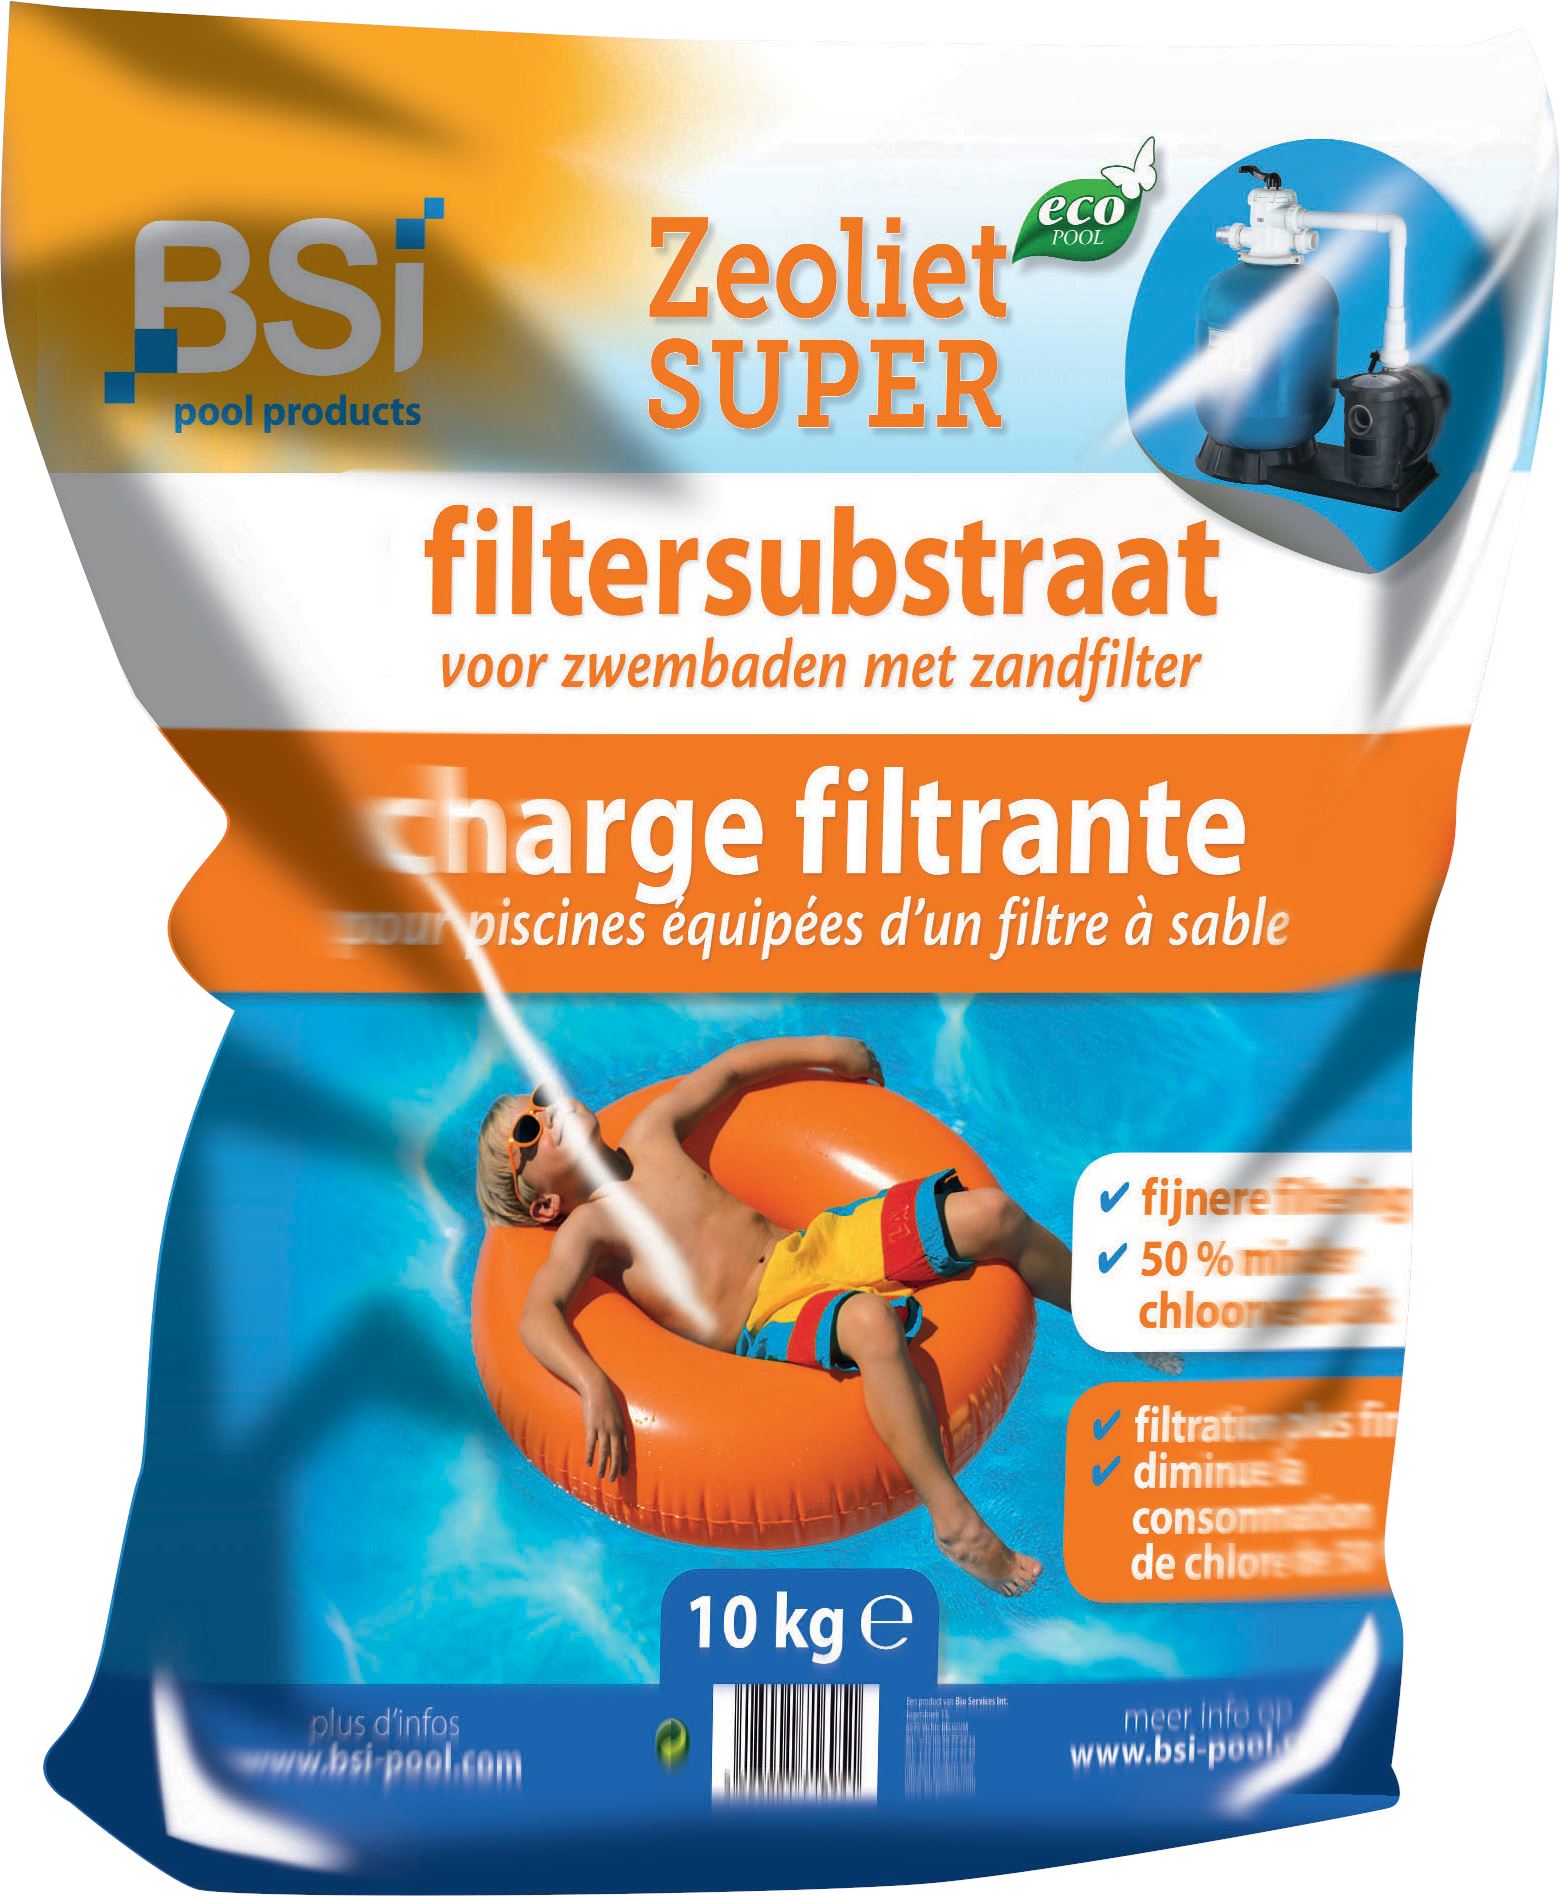 BSI Zeolite Super Filter Substrate 10kg - for pools with sand filter - 1-2.5mm grain size